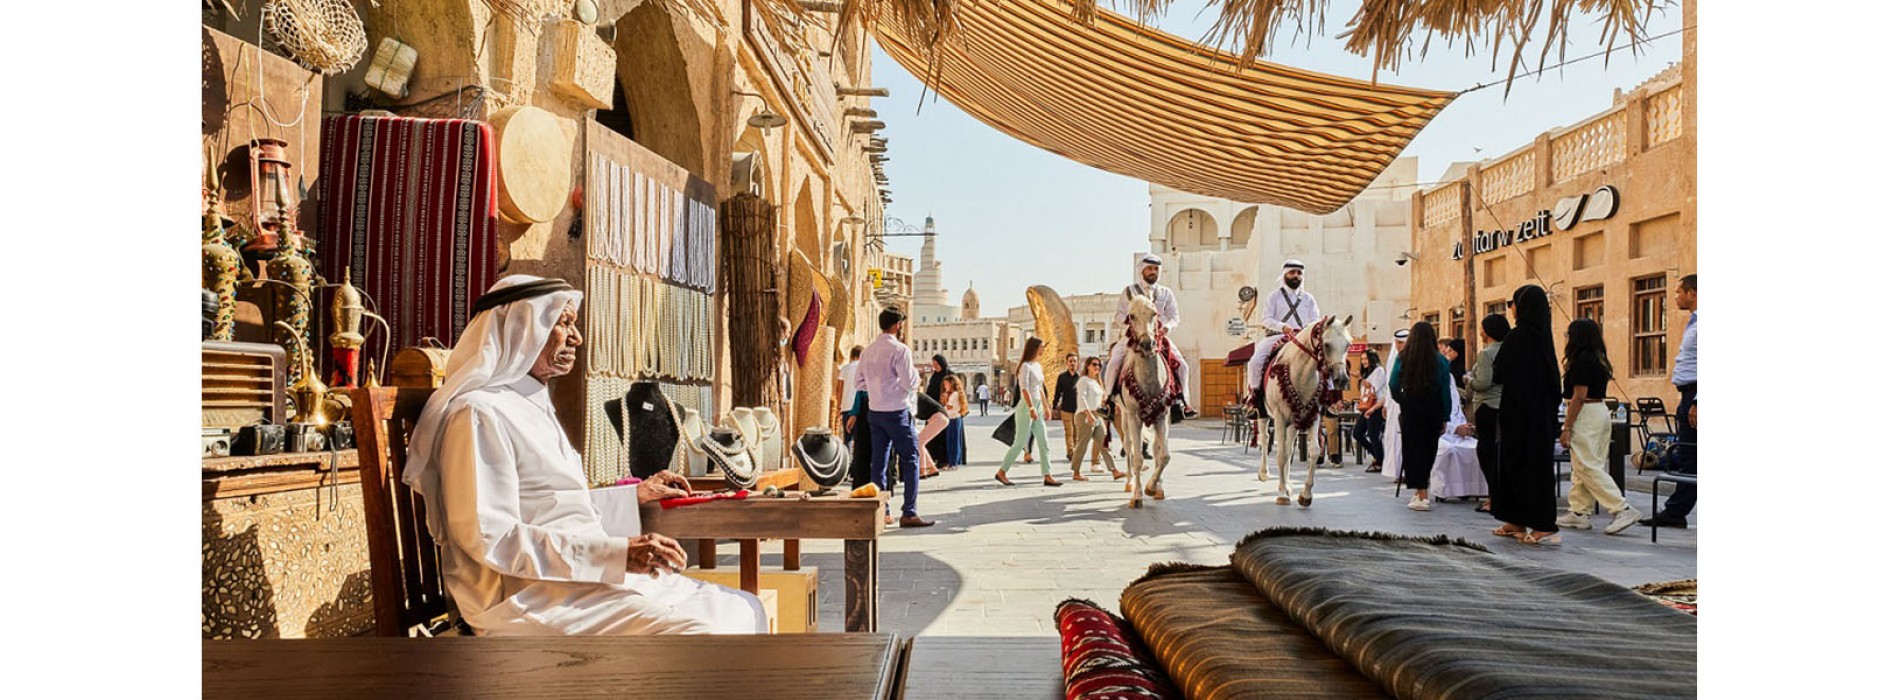 Qatar on a budget: Insider travel tips from Qatar Tourism